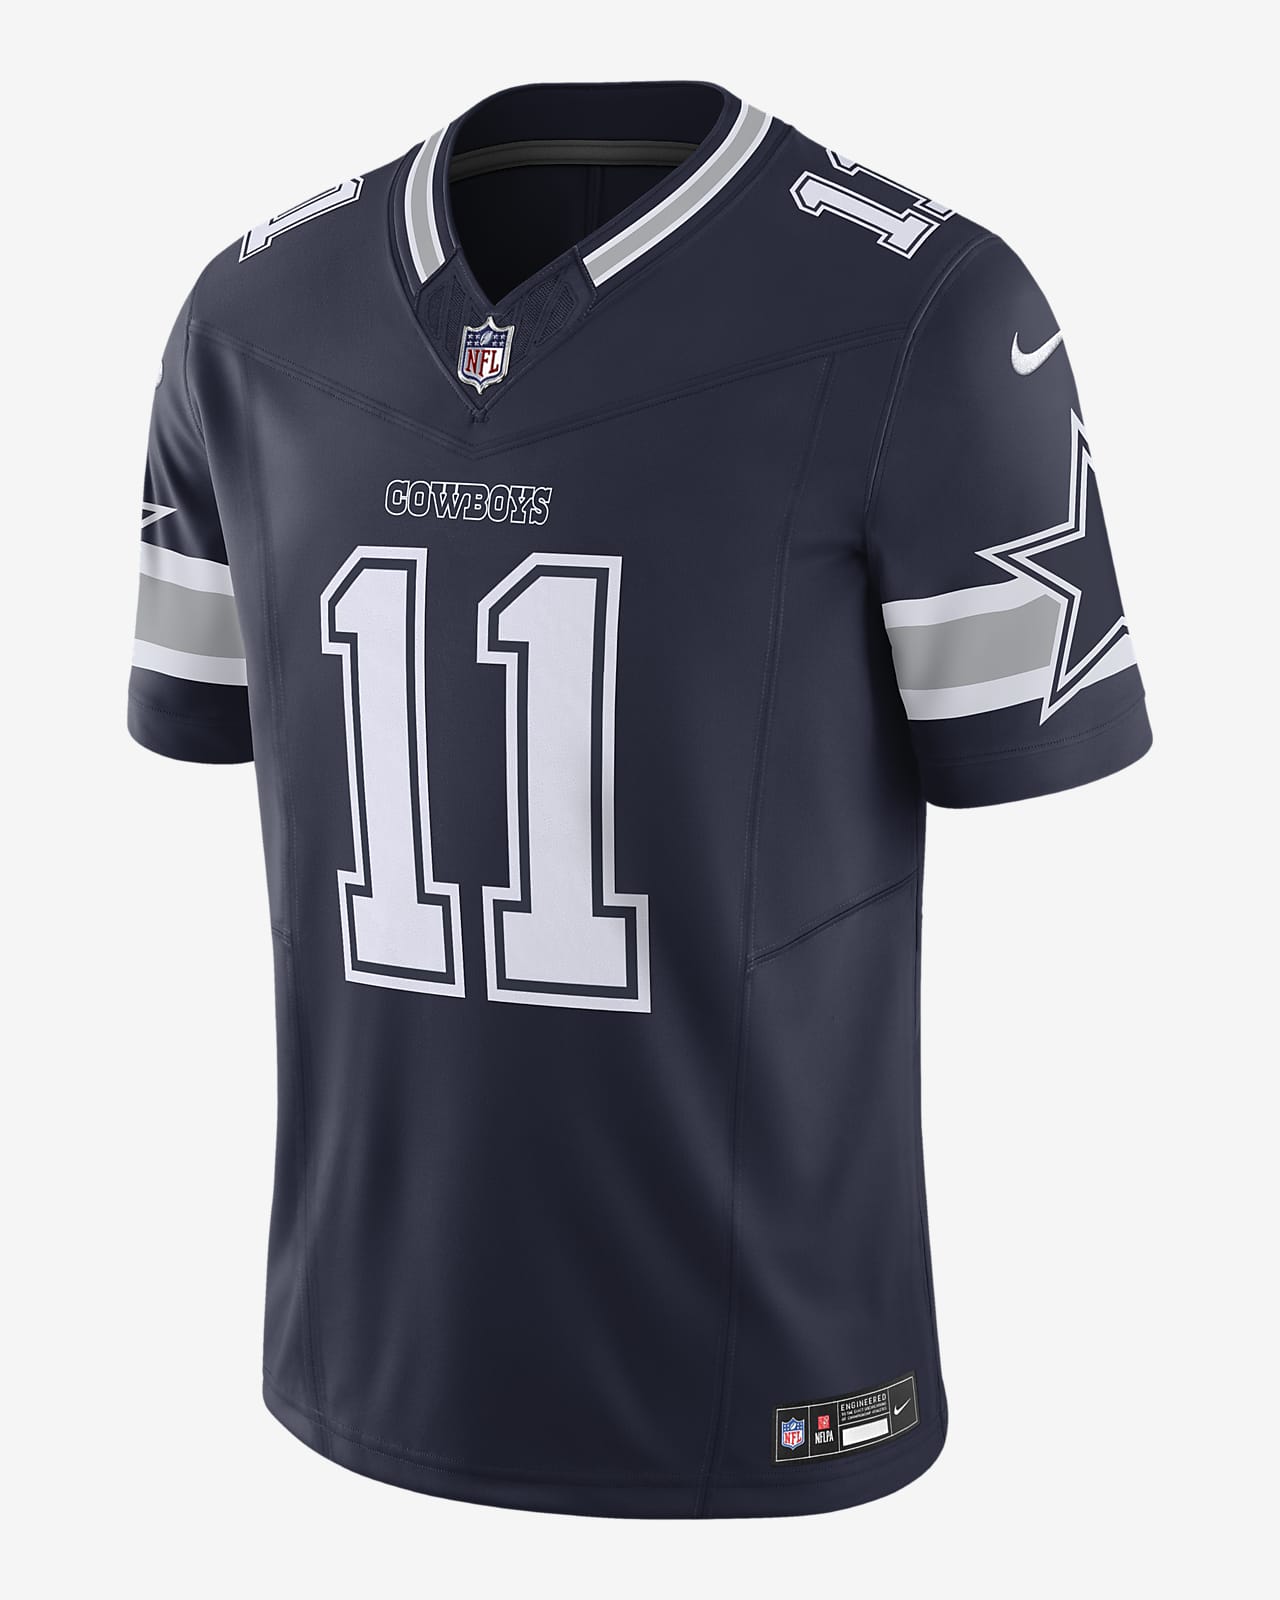 Jersey de fútbol americano Nike Dri-FIT Limited de la NFL para hombre Micah Parsons Dallas Cowboys